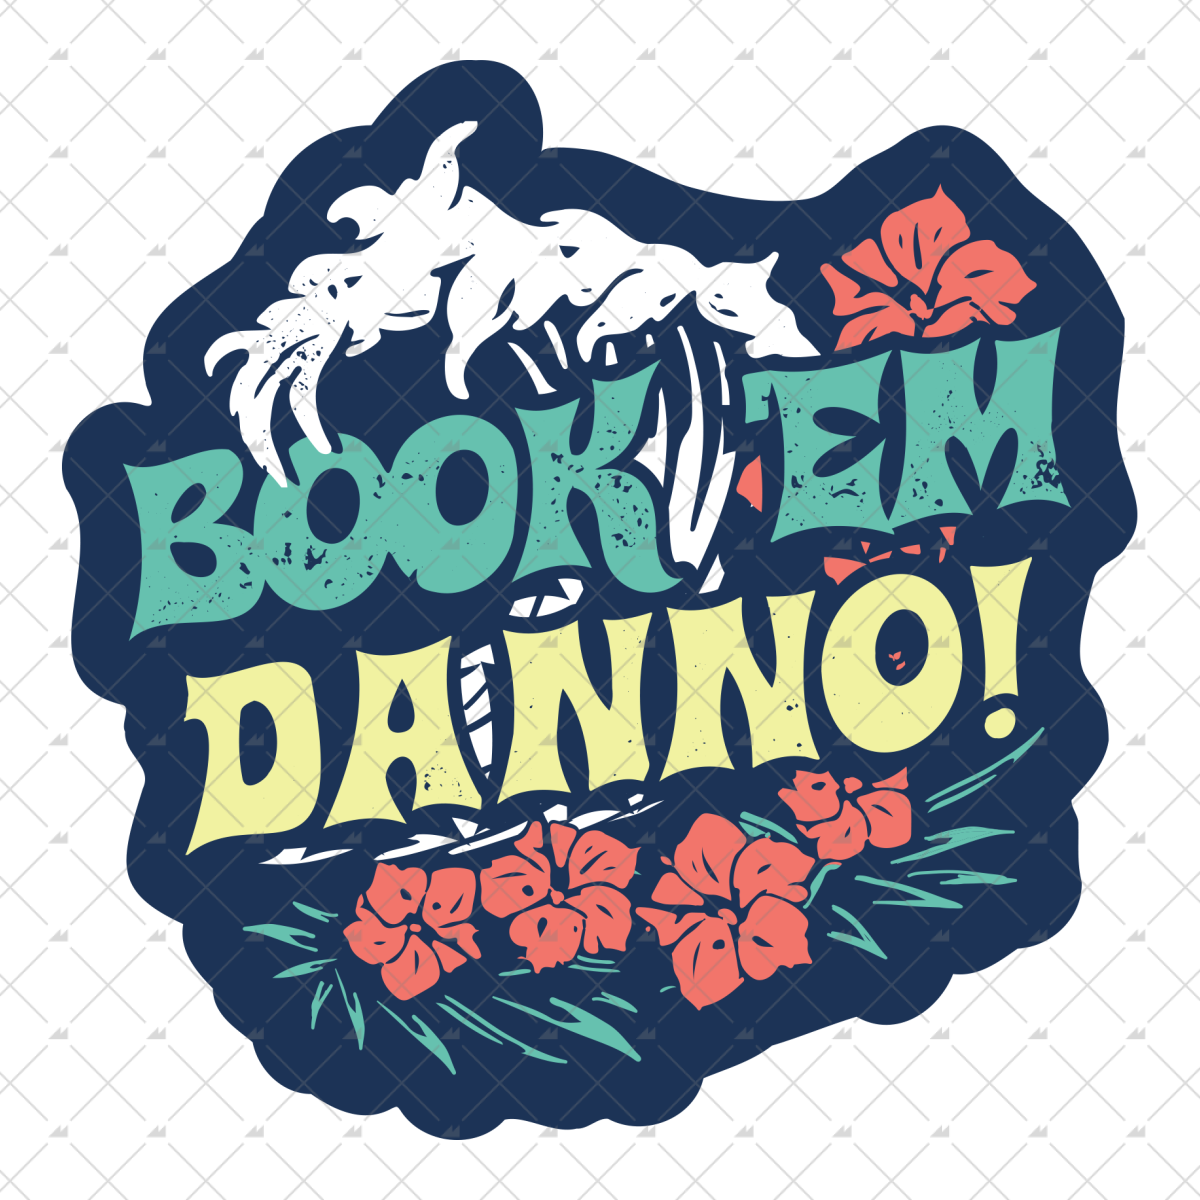 Book 'em Danno - Sticker